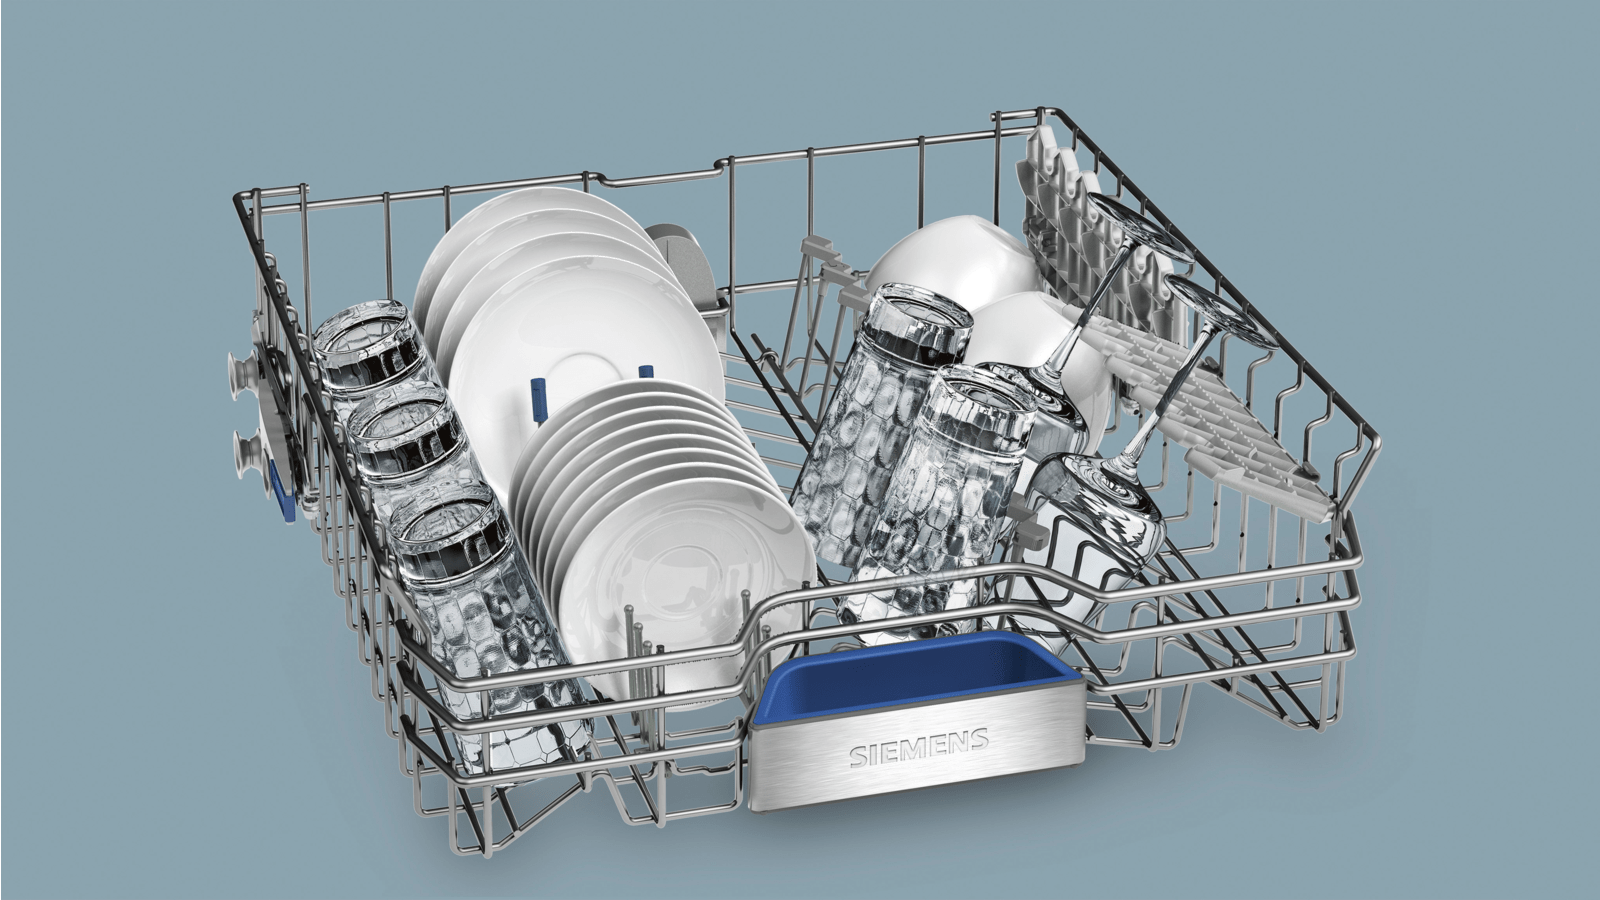 siemens iq700 dishwasher integrated